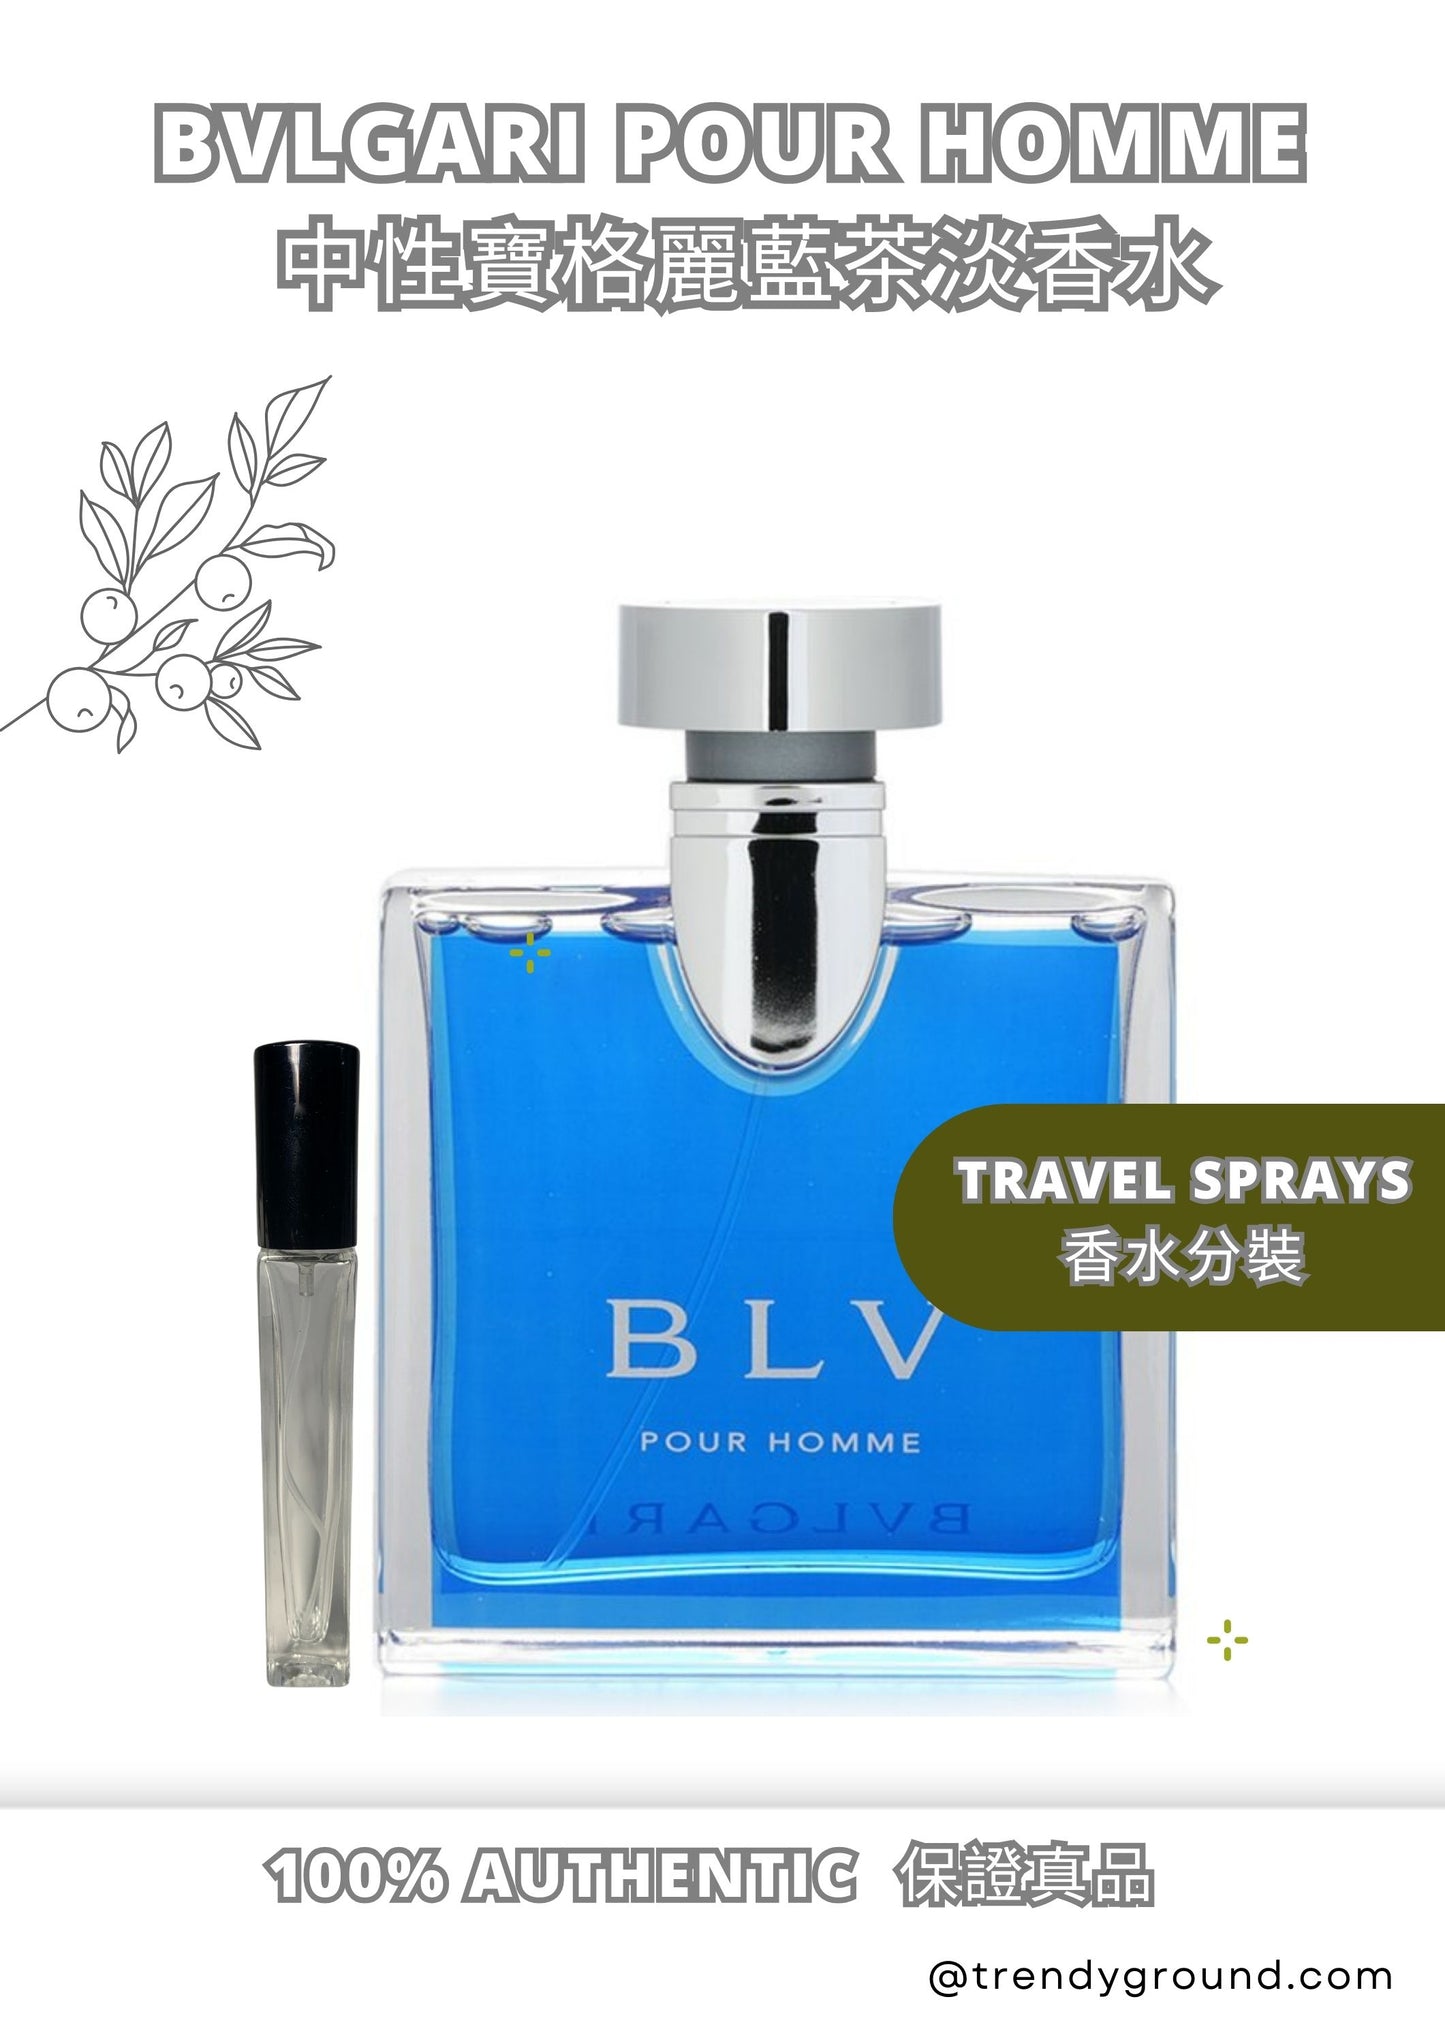 Bvlgari Pour Homme Travel Sprays小樣中性藍茶淡香水分裝瓶